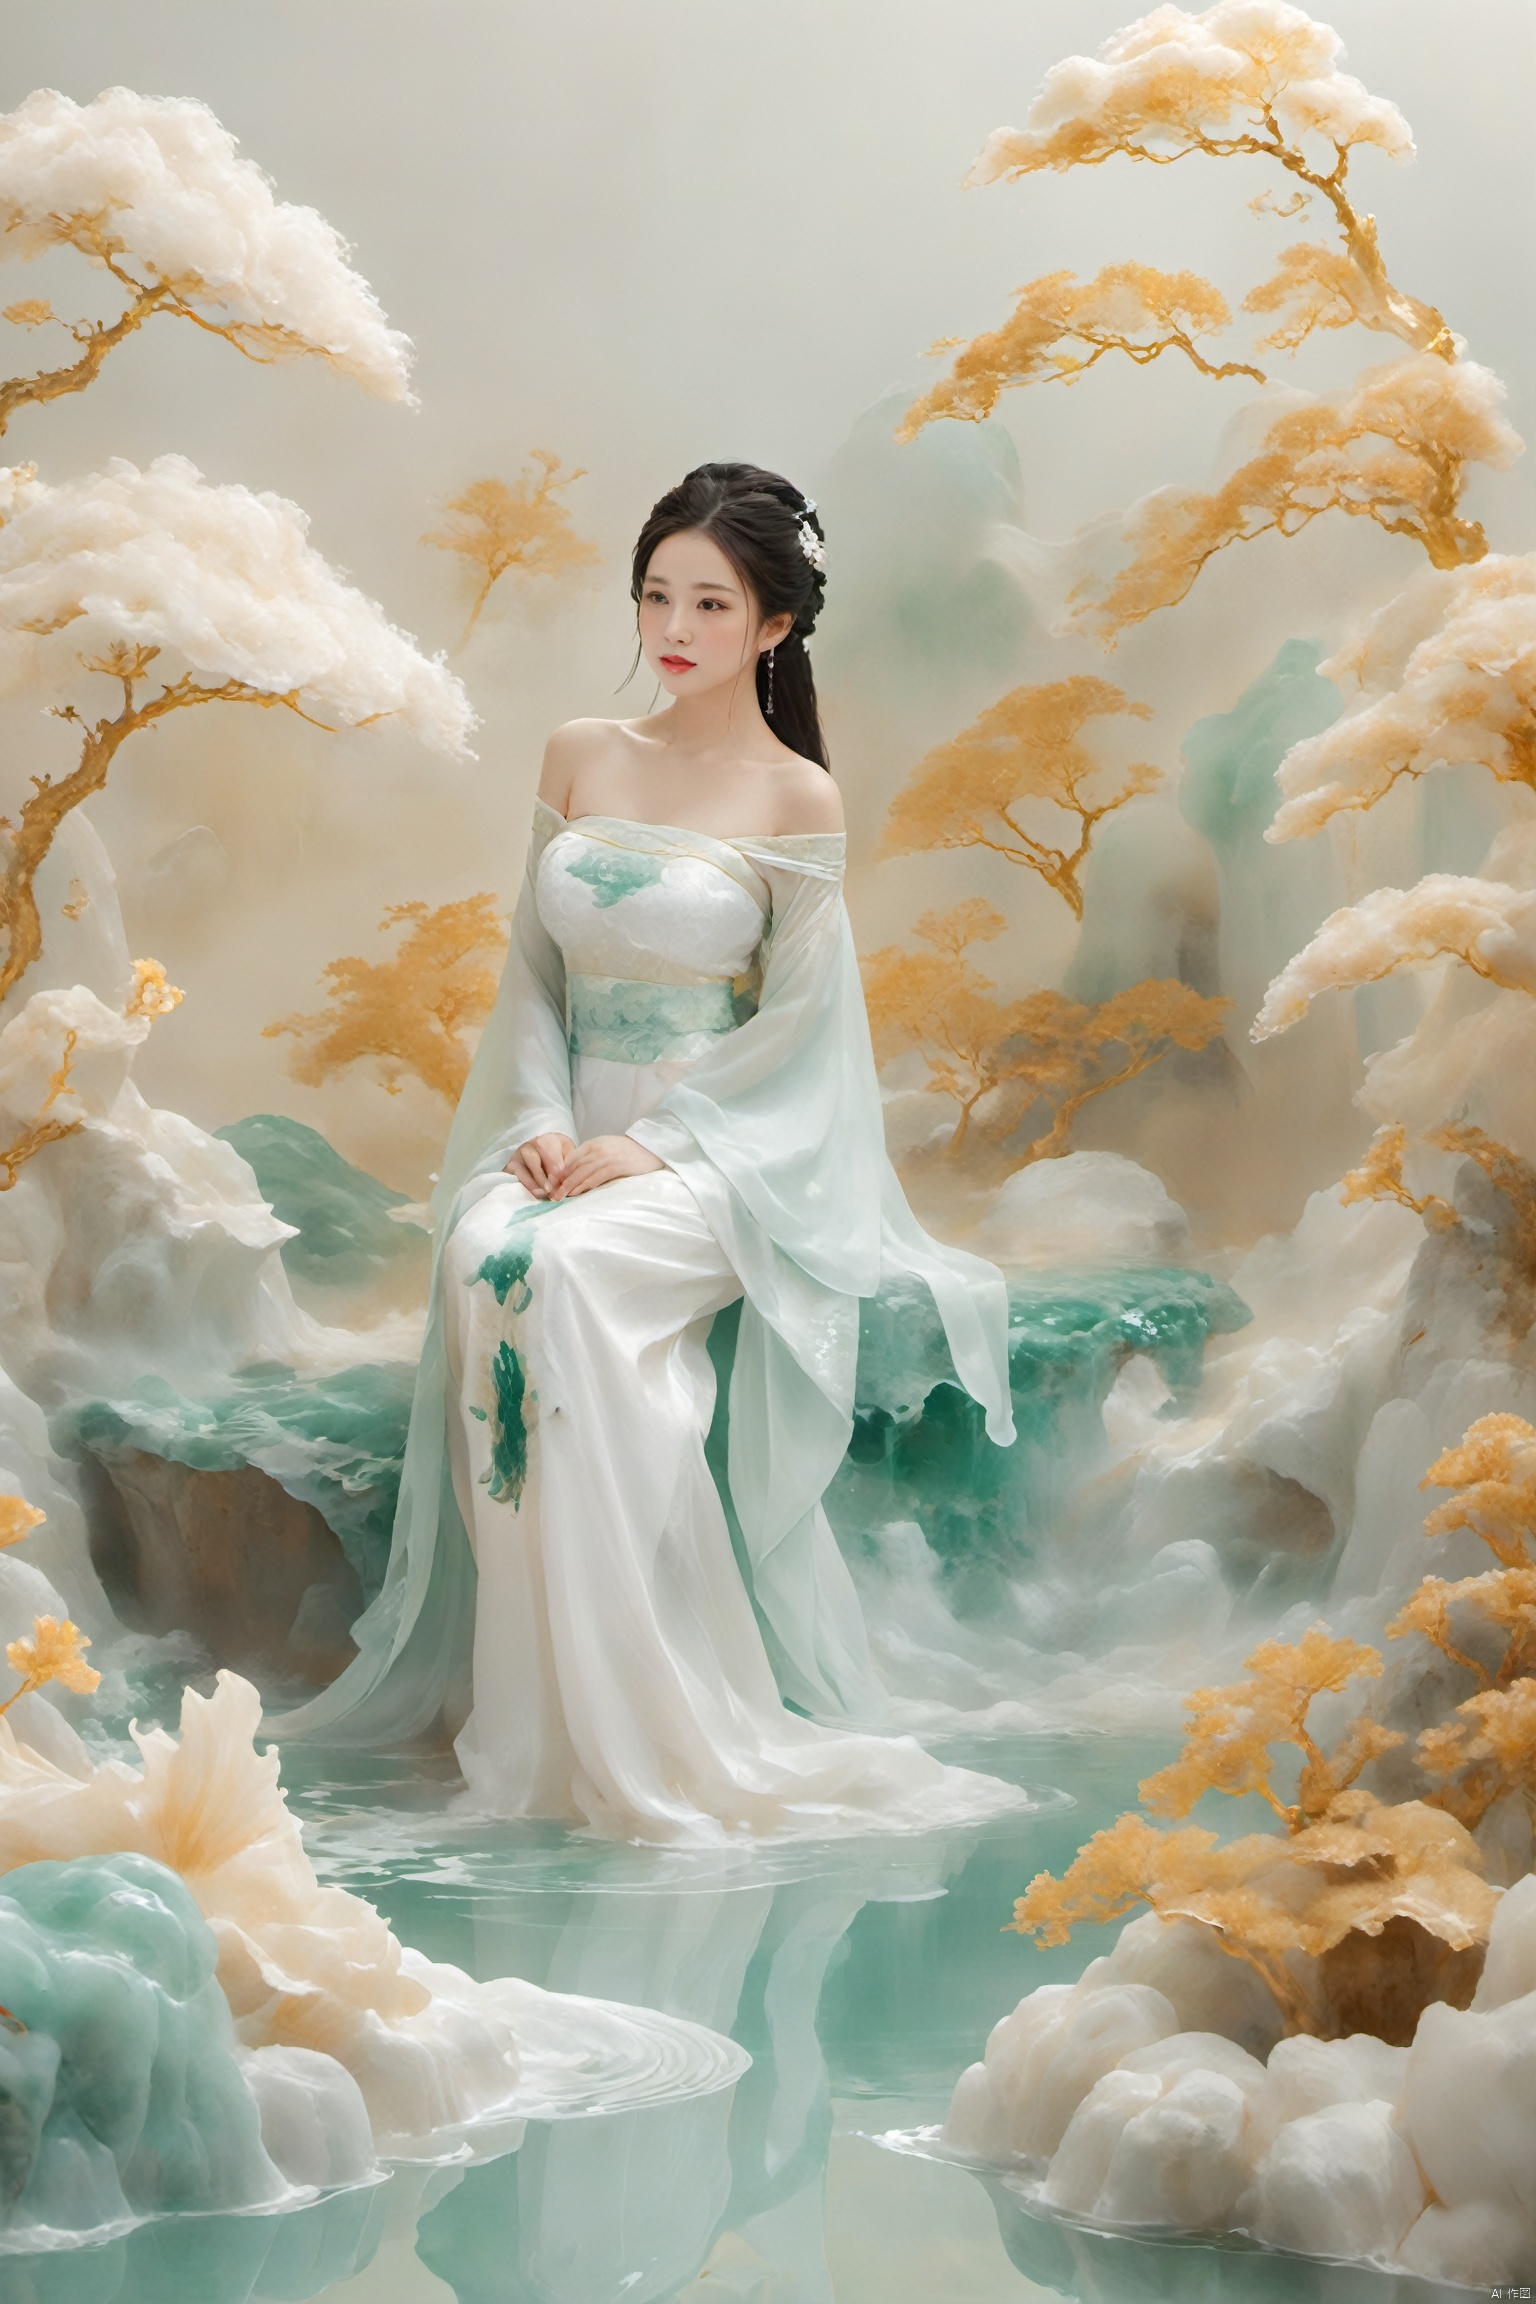  arien_hanfu, mermaid,east dragon,pure white theme,deep in the water,sea,under sea,30 yo lady,large_breasts, guohua, HUBG_Chinese_Jade, Relief style